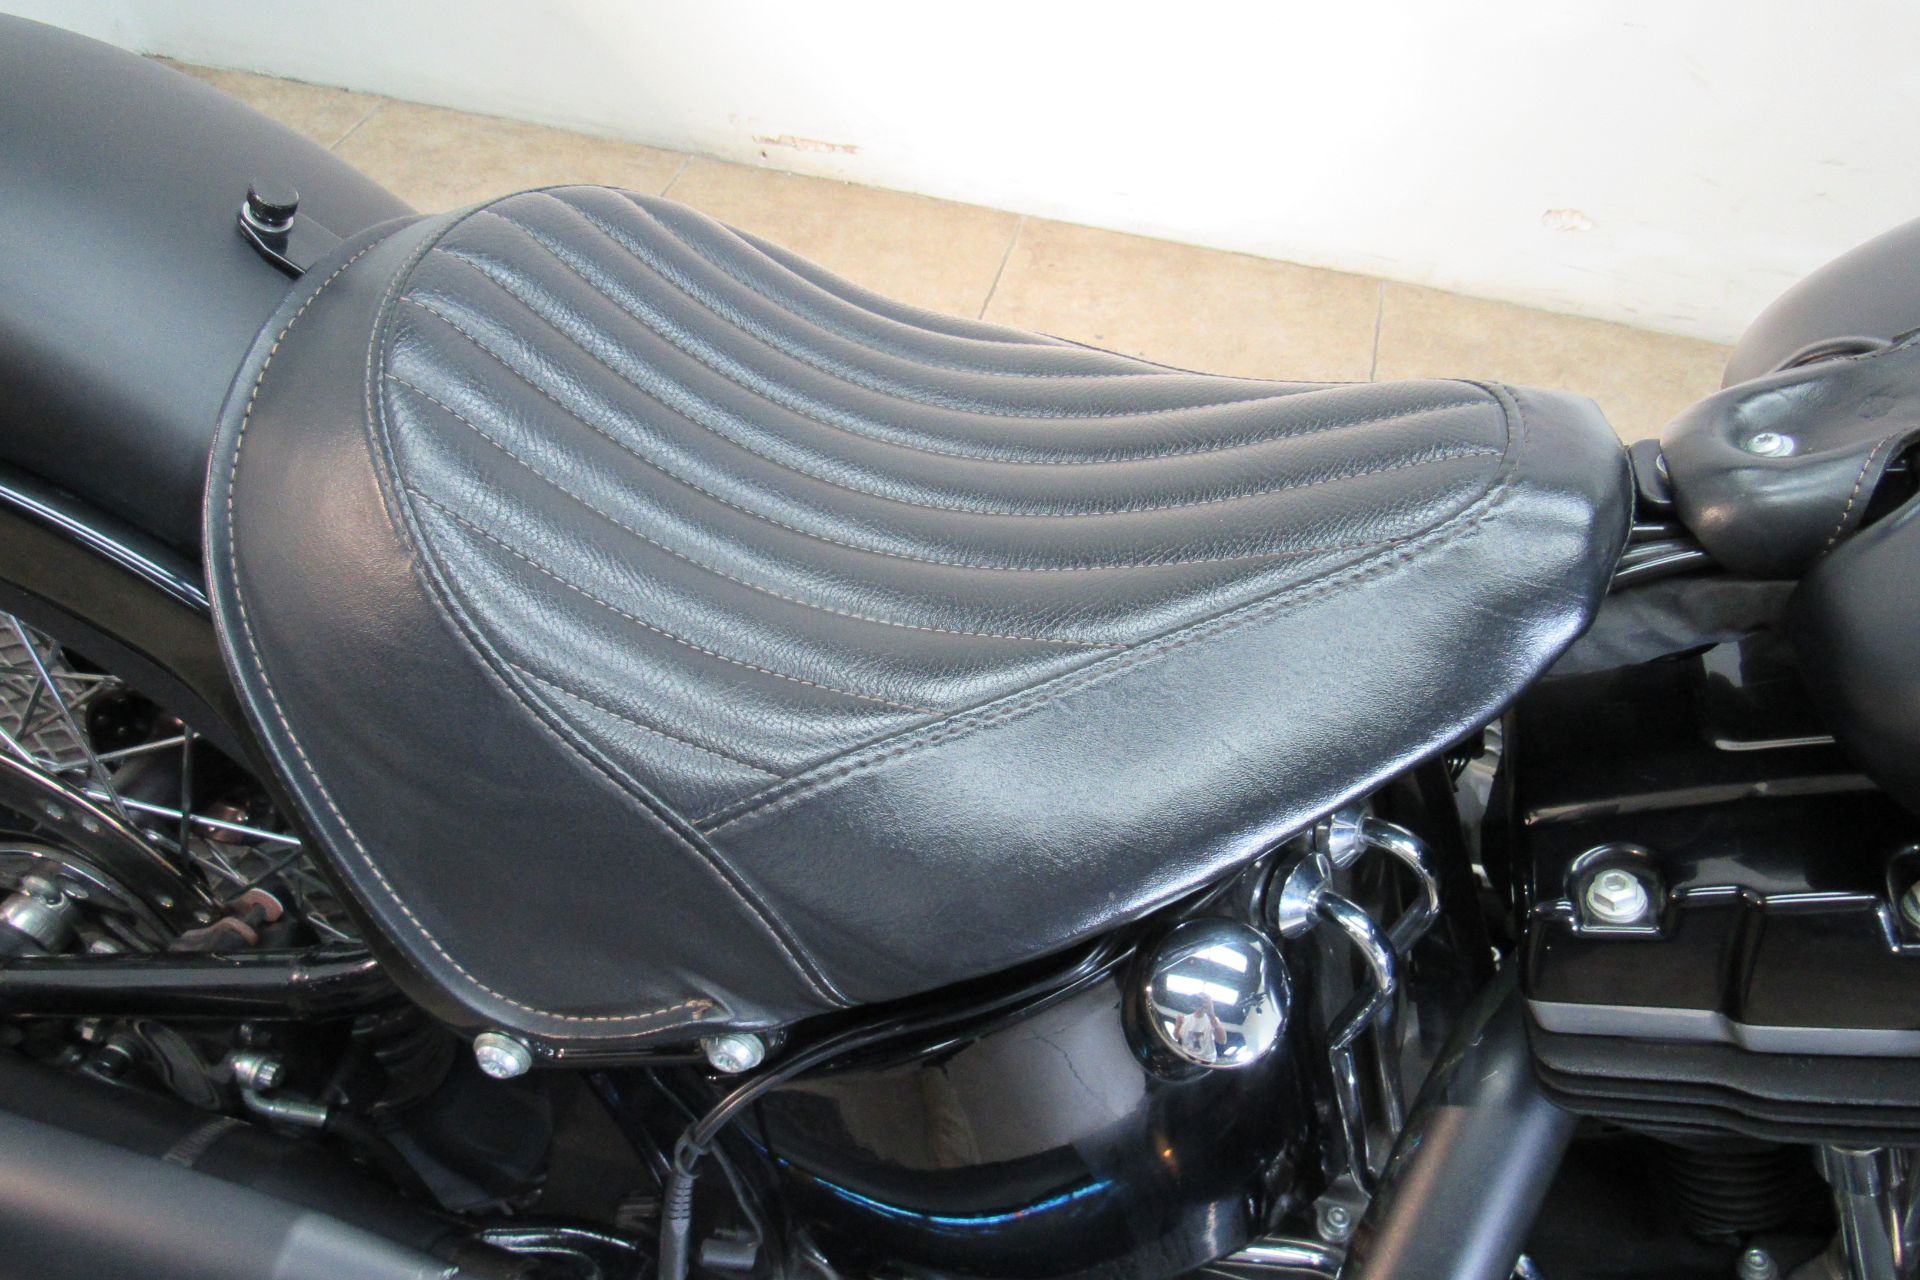 2014 Harley-Davidson Softail Slim® in Temecula, California - Photo 20